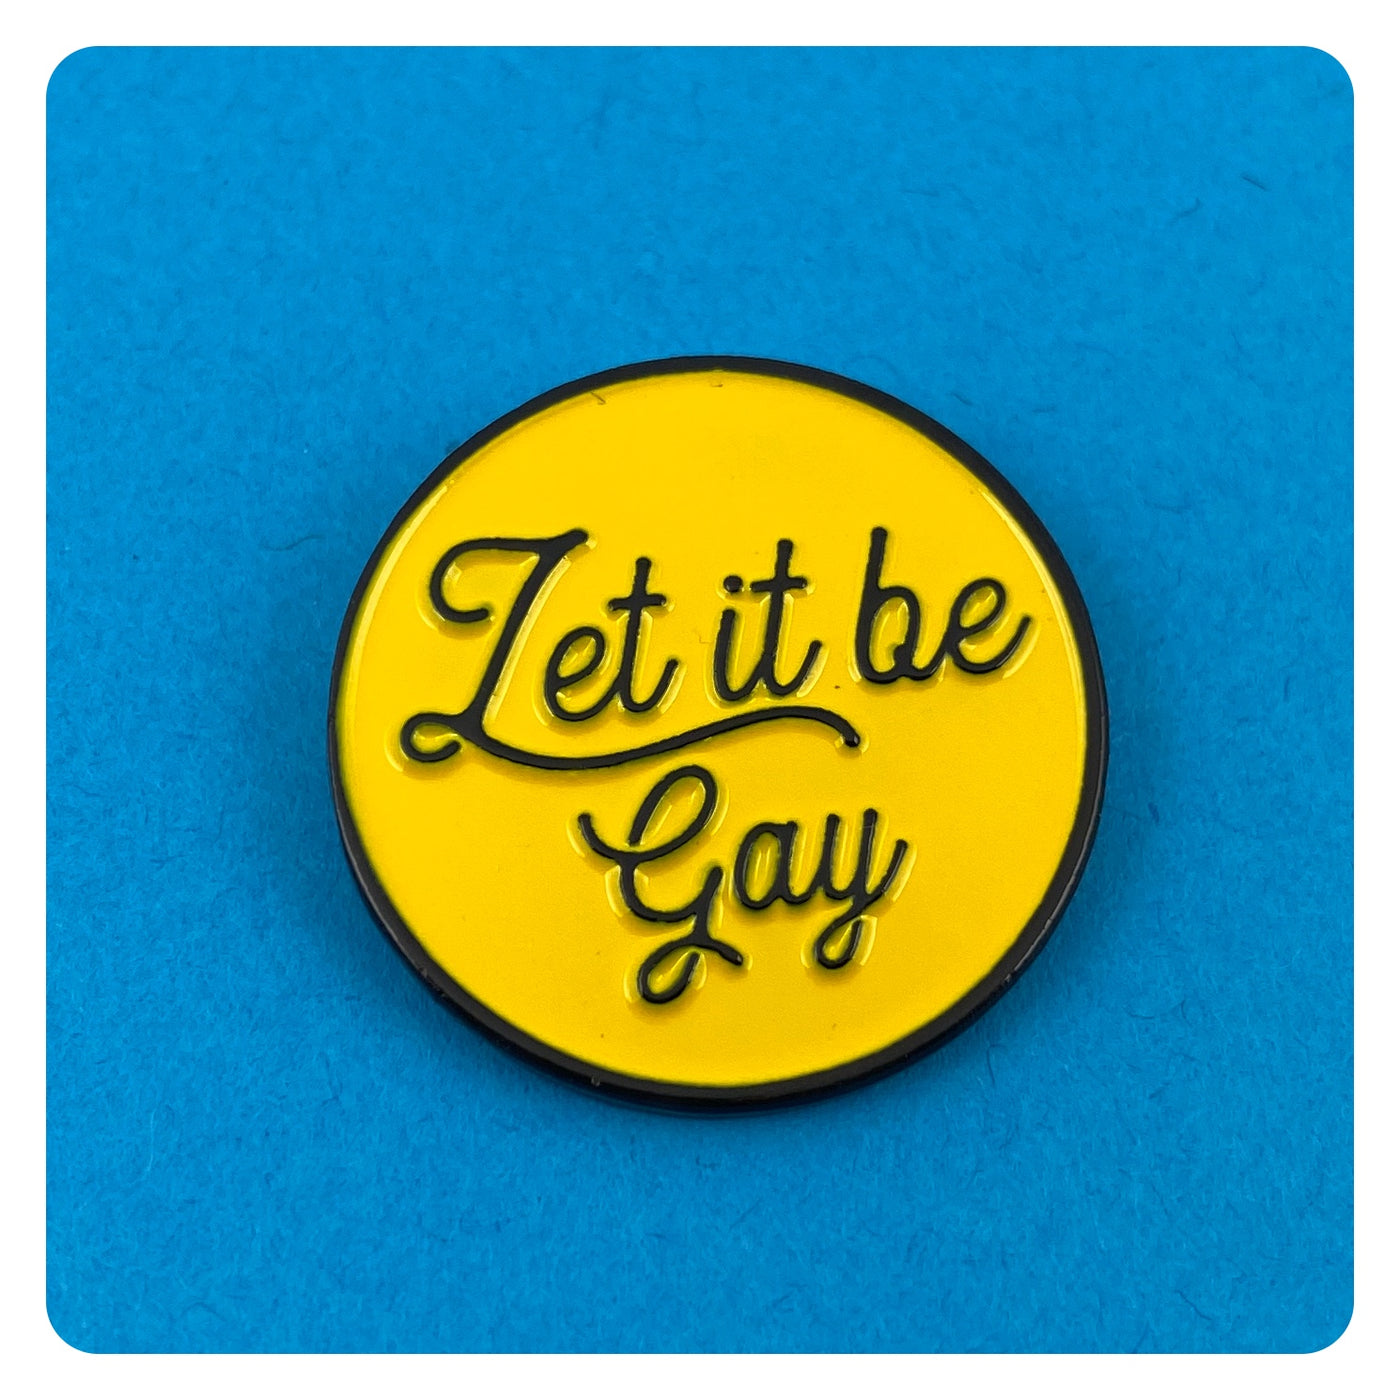 Let It Be Gay Enamel Pin